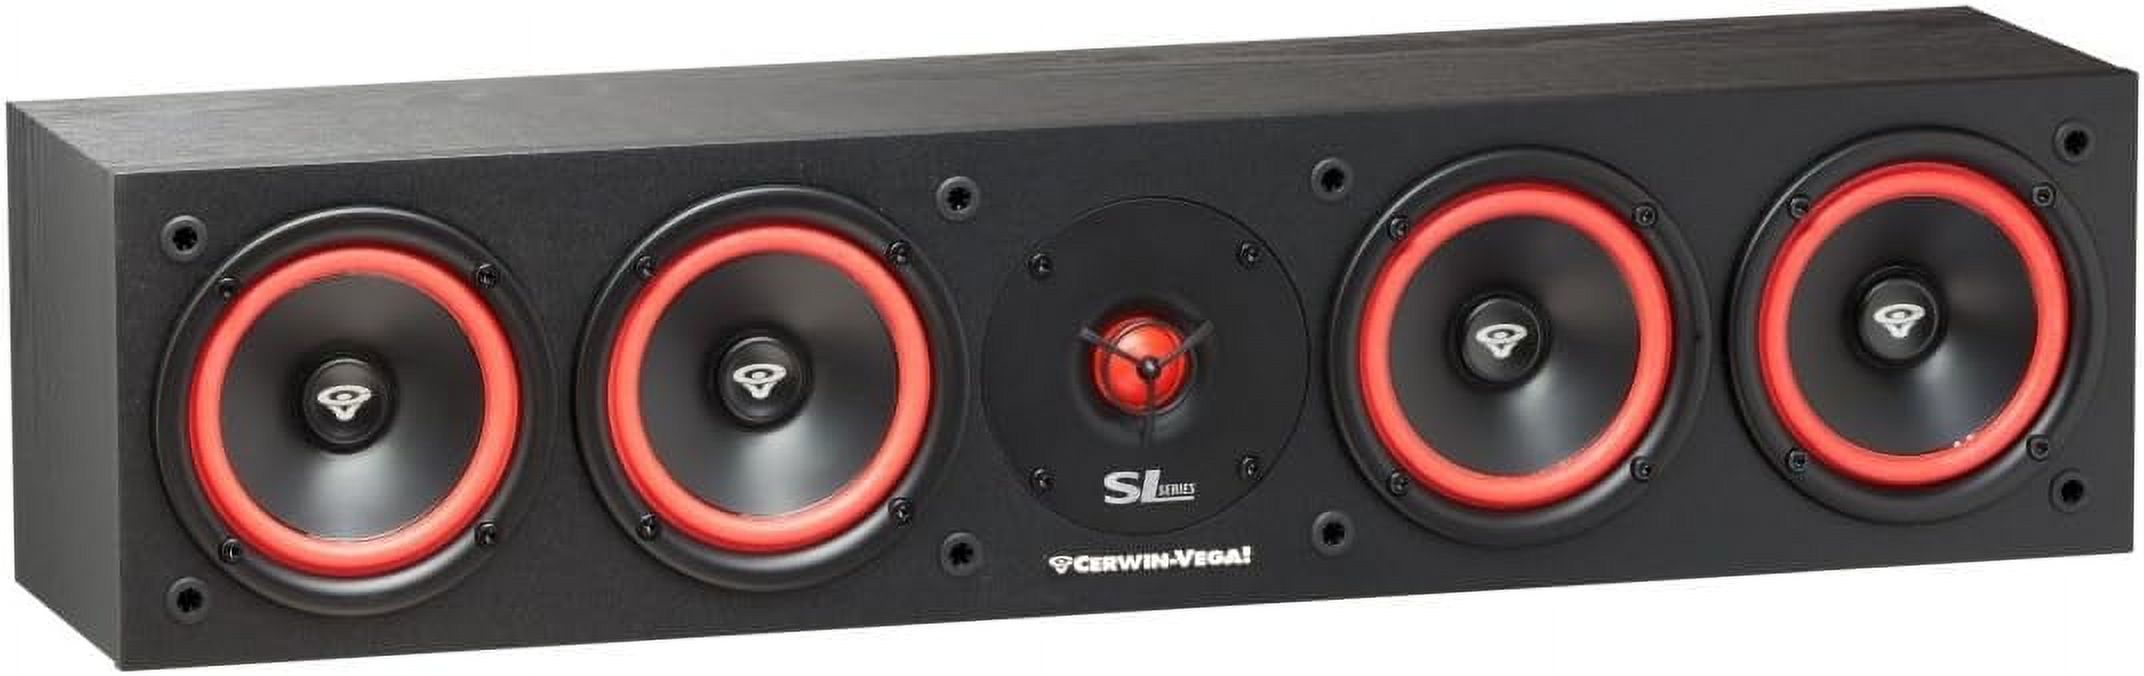 Cerwin-Vega SL-45C Quad 5 1/4 Center Channel Speaker - image 5 of 5